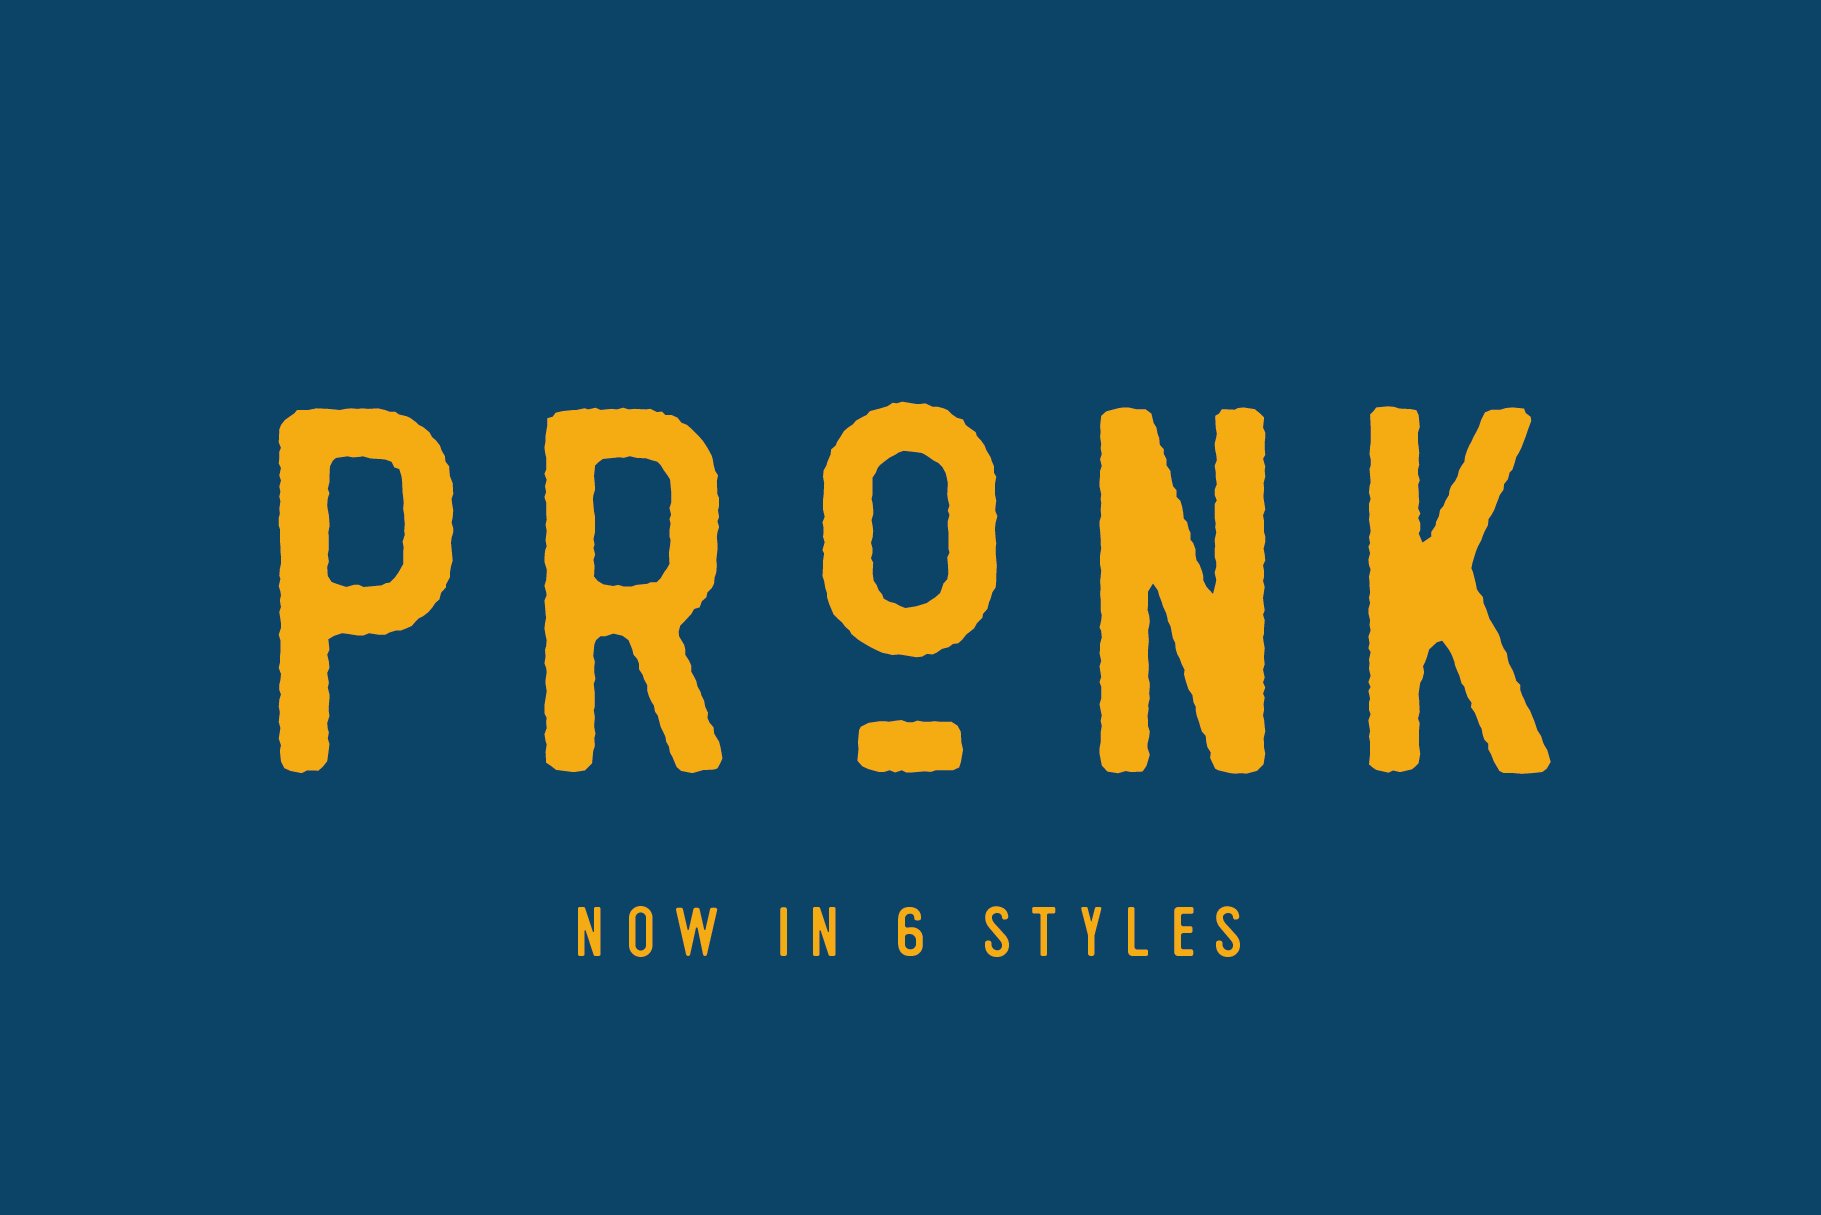 Pronk - retro vintage display font cover image.